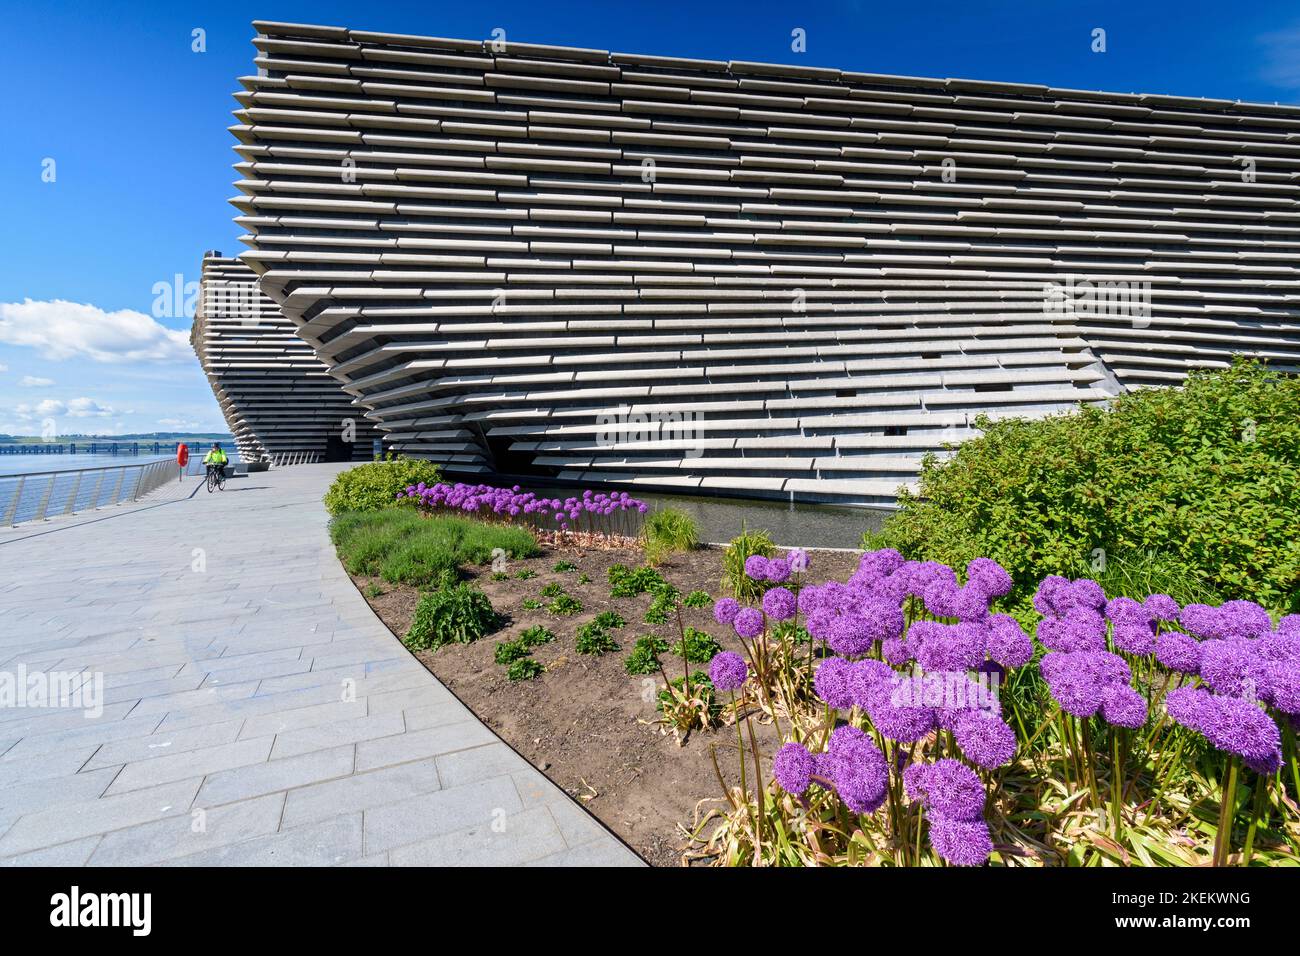 The V&A Design Museum, from the Riverside Esplanade, Dundee, Scotland, UK.  Architect Kengo Kuma.  Opened Sept 2018. Stock Photo